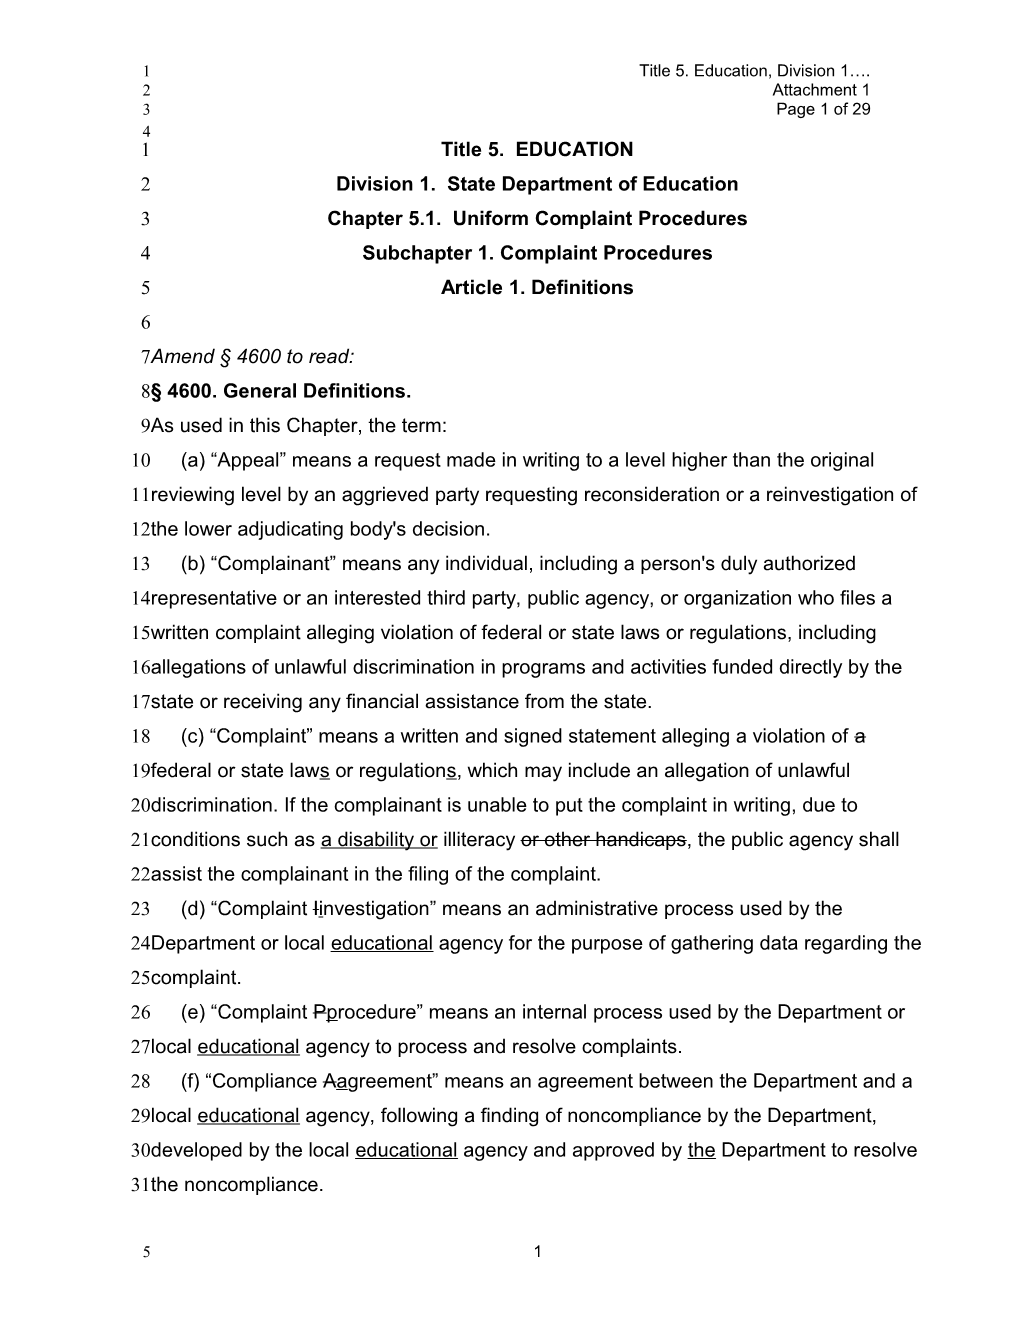 October 2004 SDAD Item 1 Attachment 1 - Information Memorandum (CA State Board of Education)